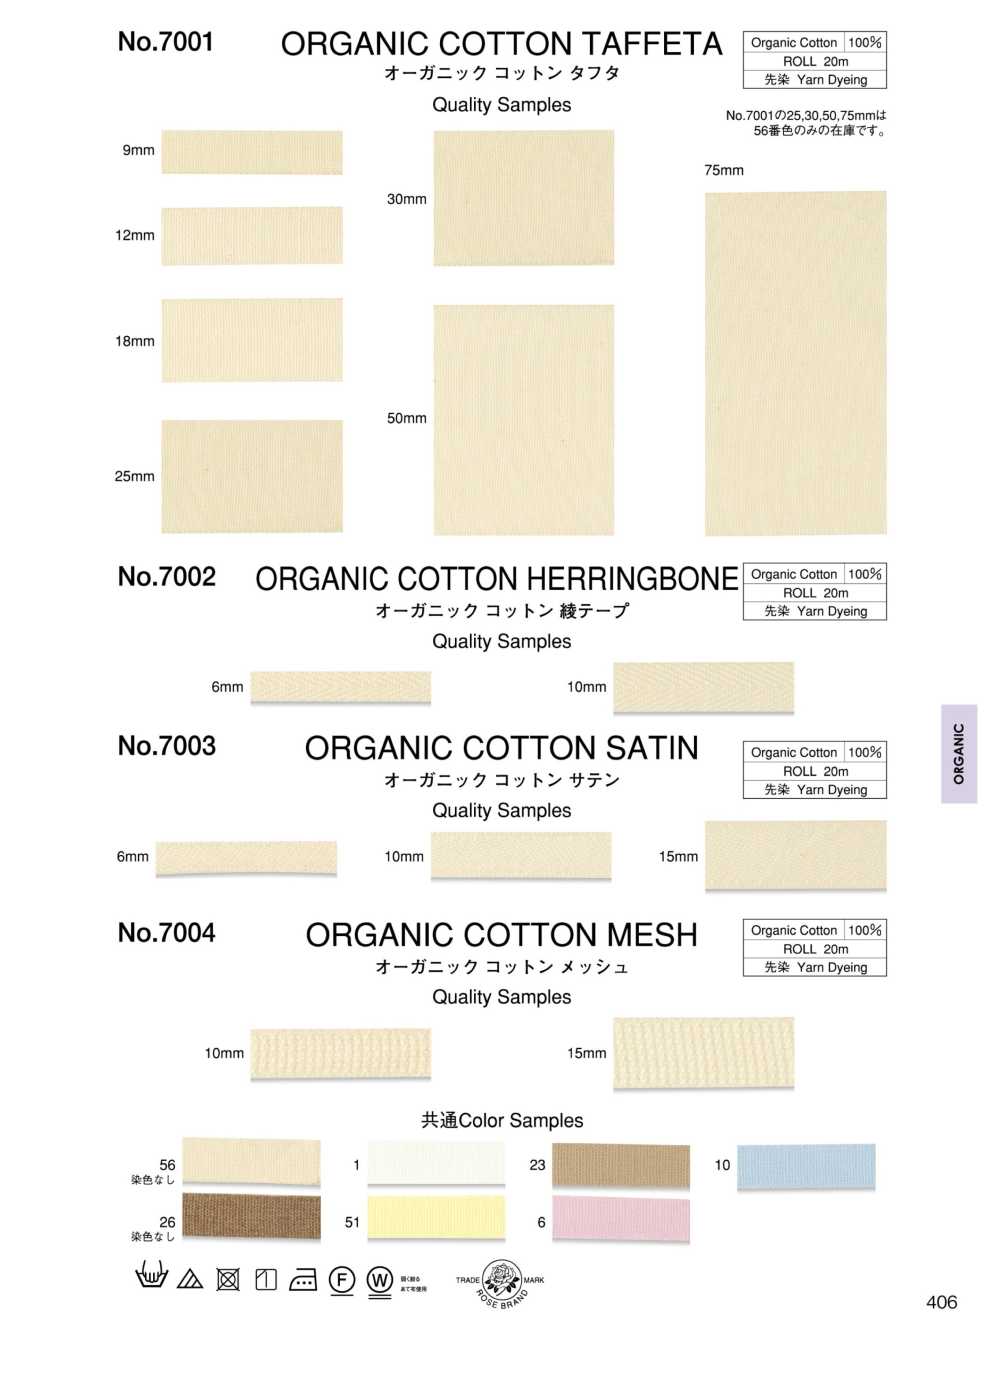 7003 Organic Cotton Satin[Ribbon Tape Cord] ROSE BRAND (Marushin)